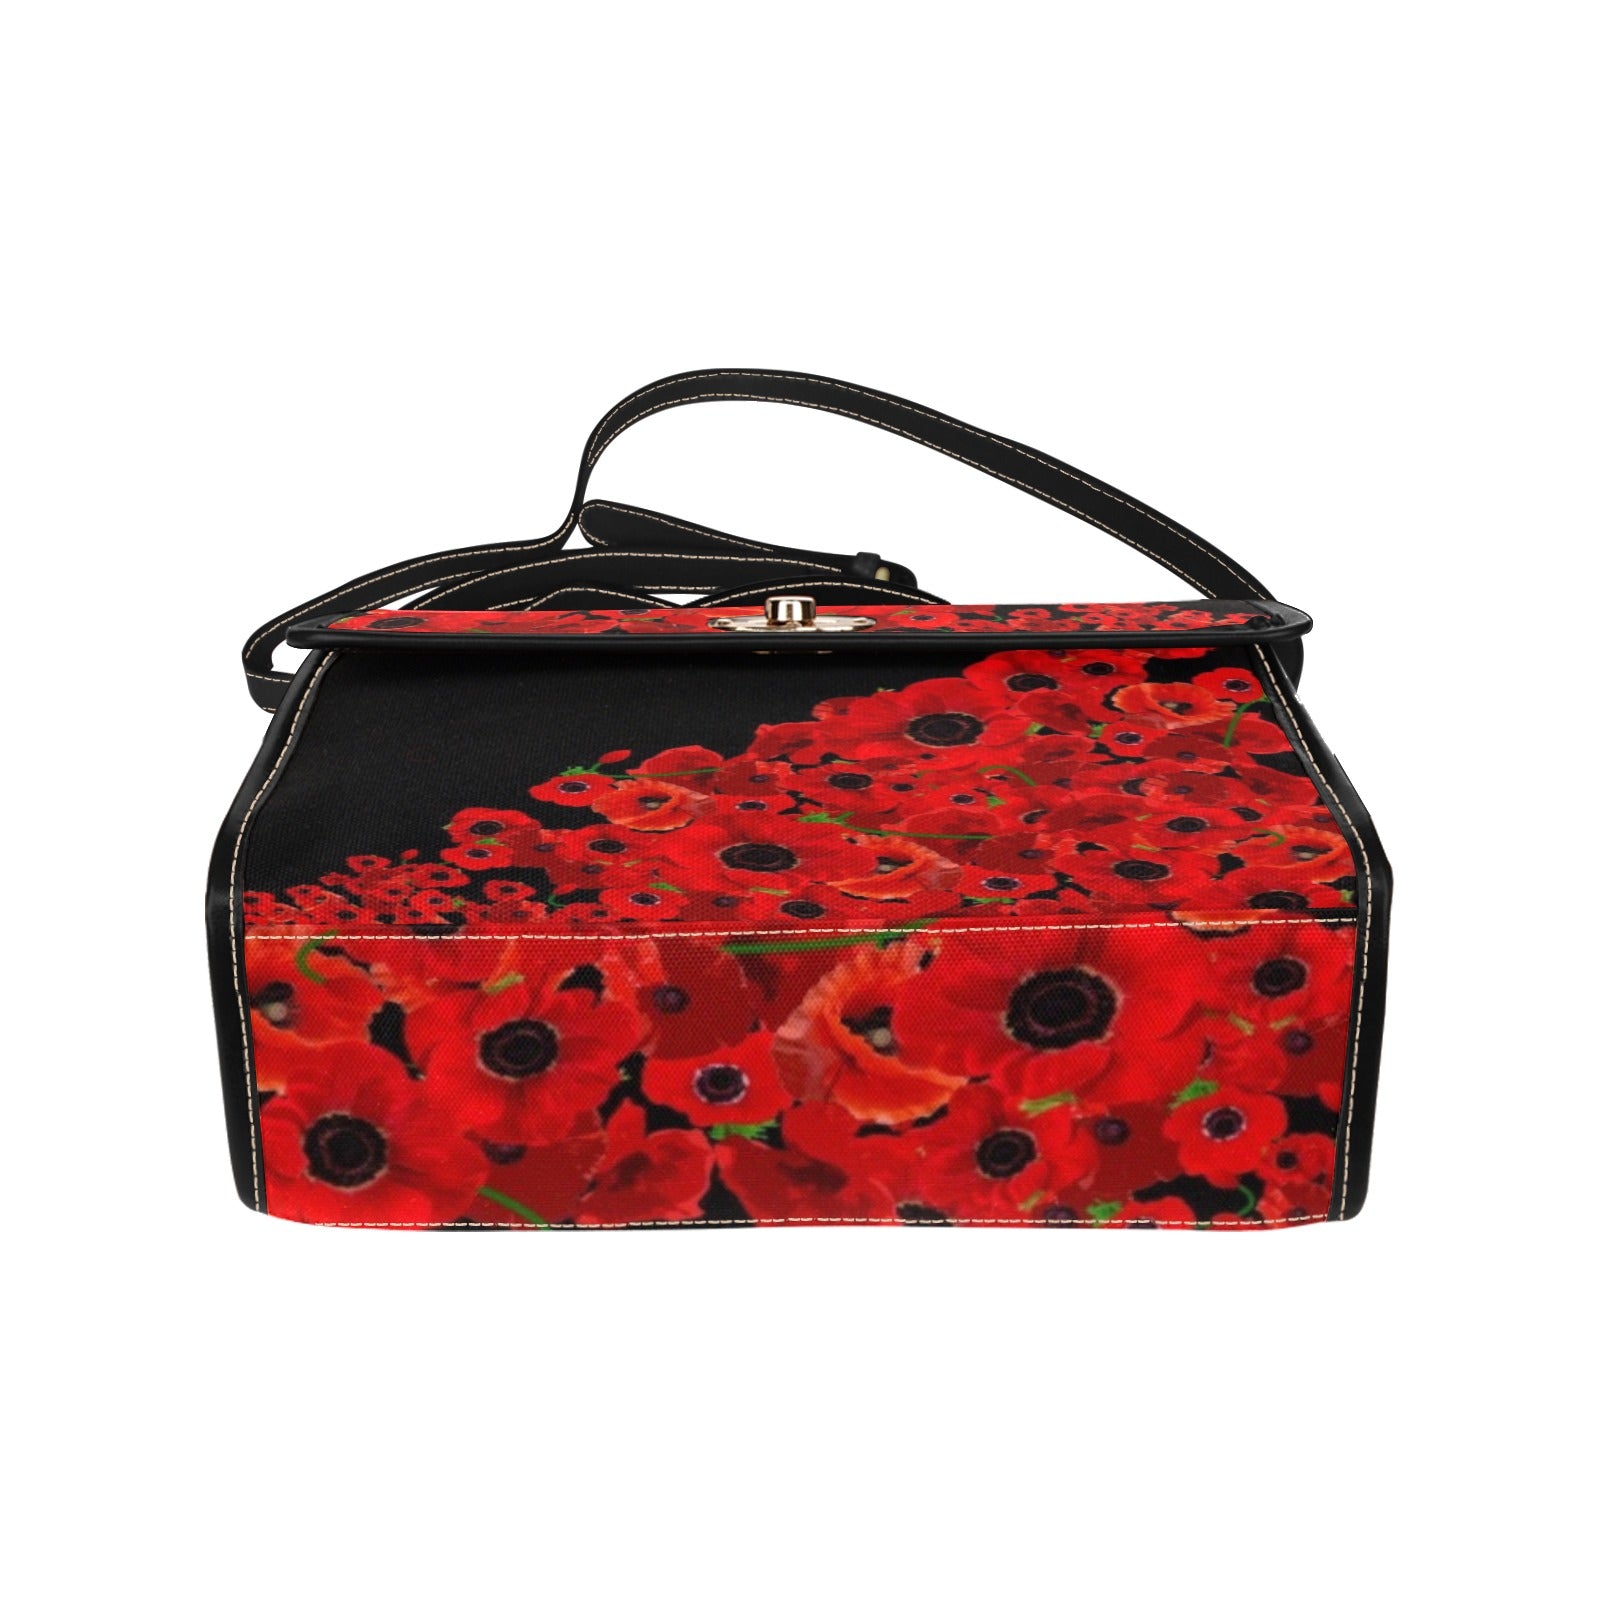 Poppies - Waterproof Canvas Handbag